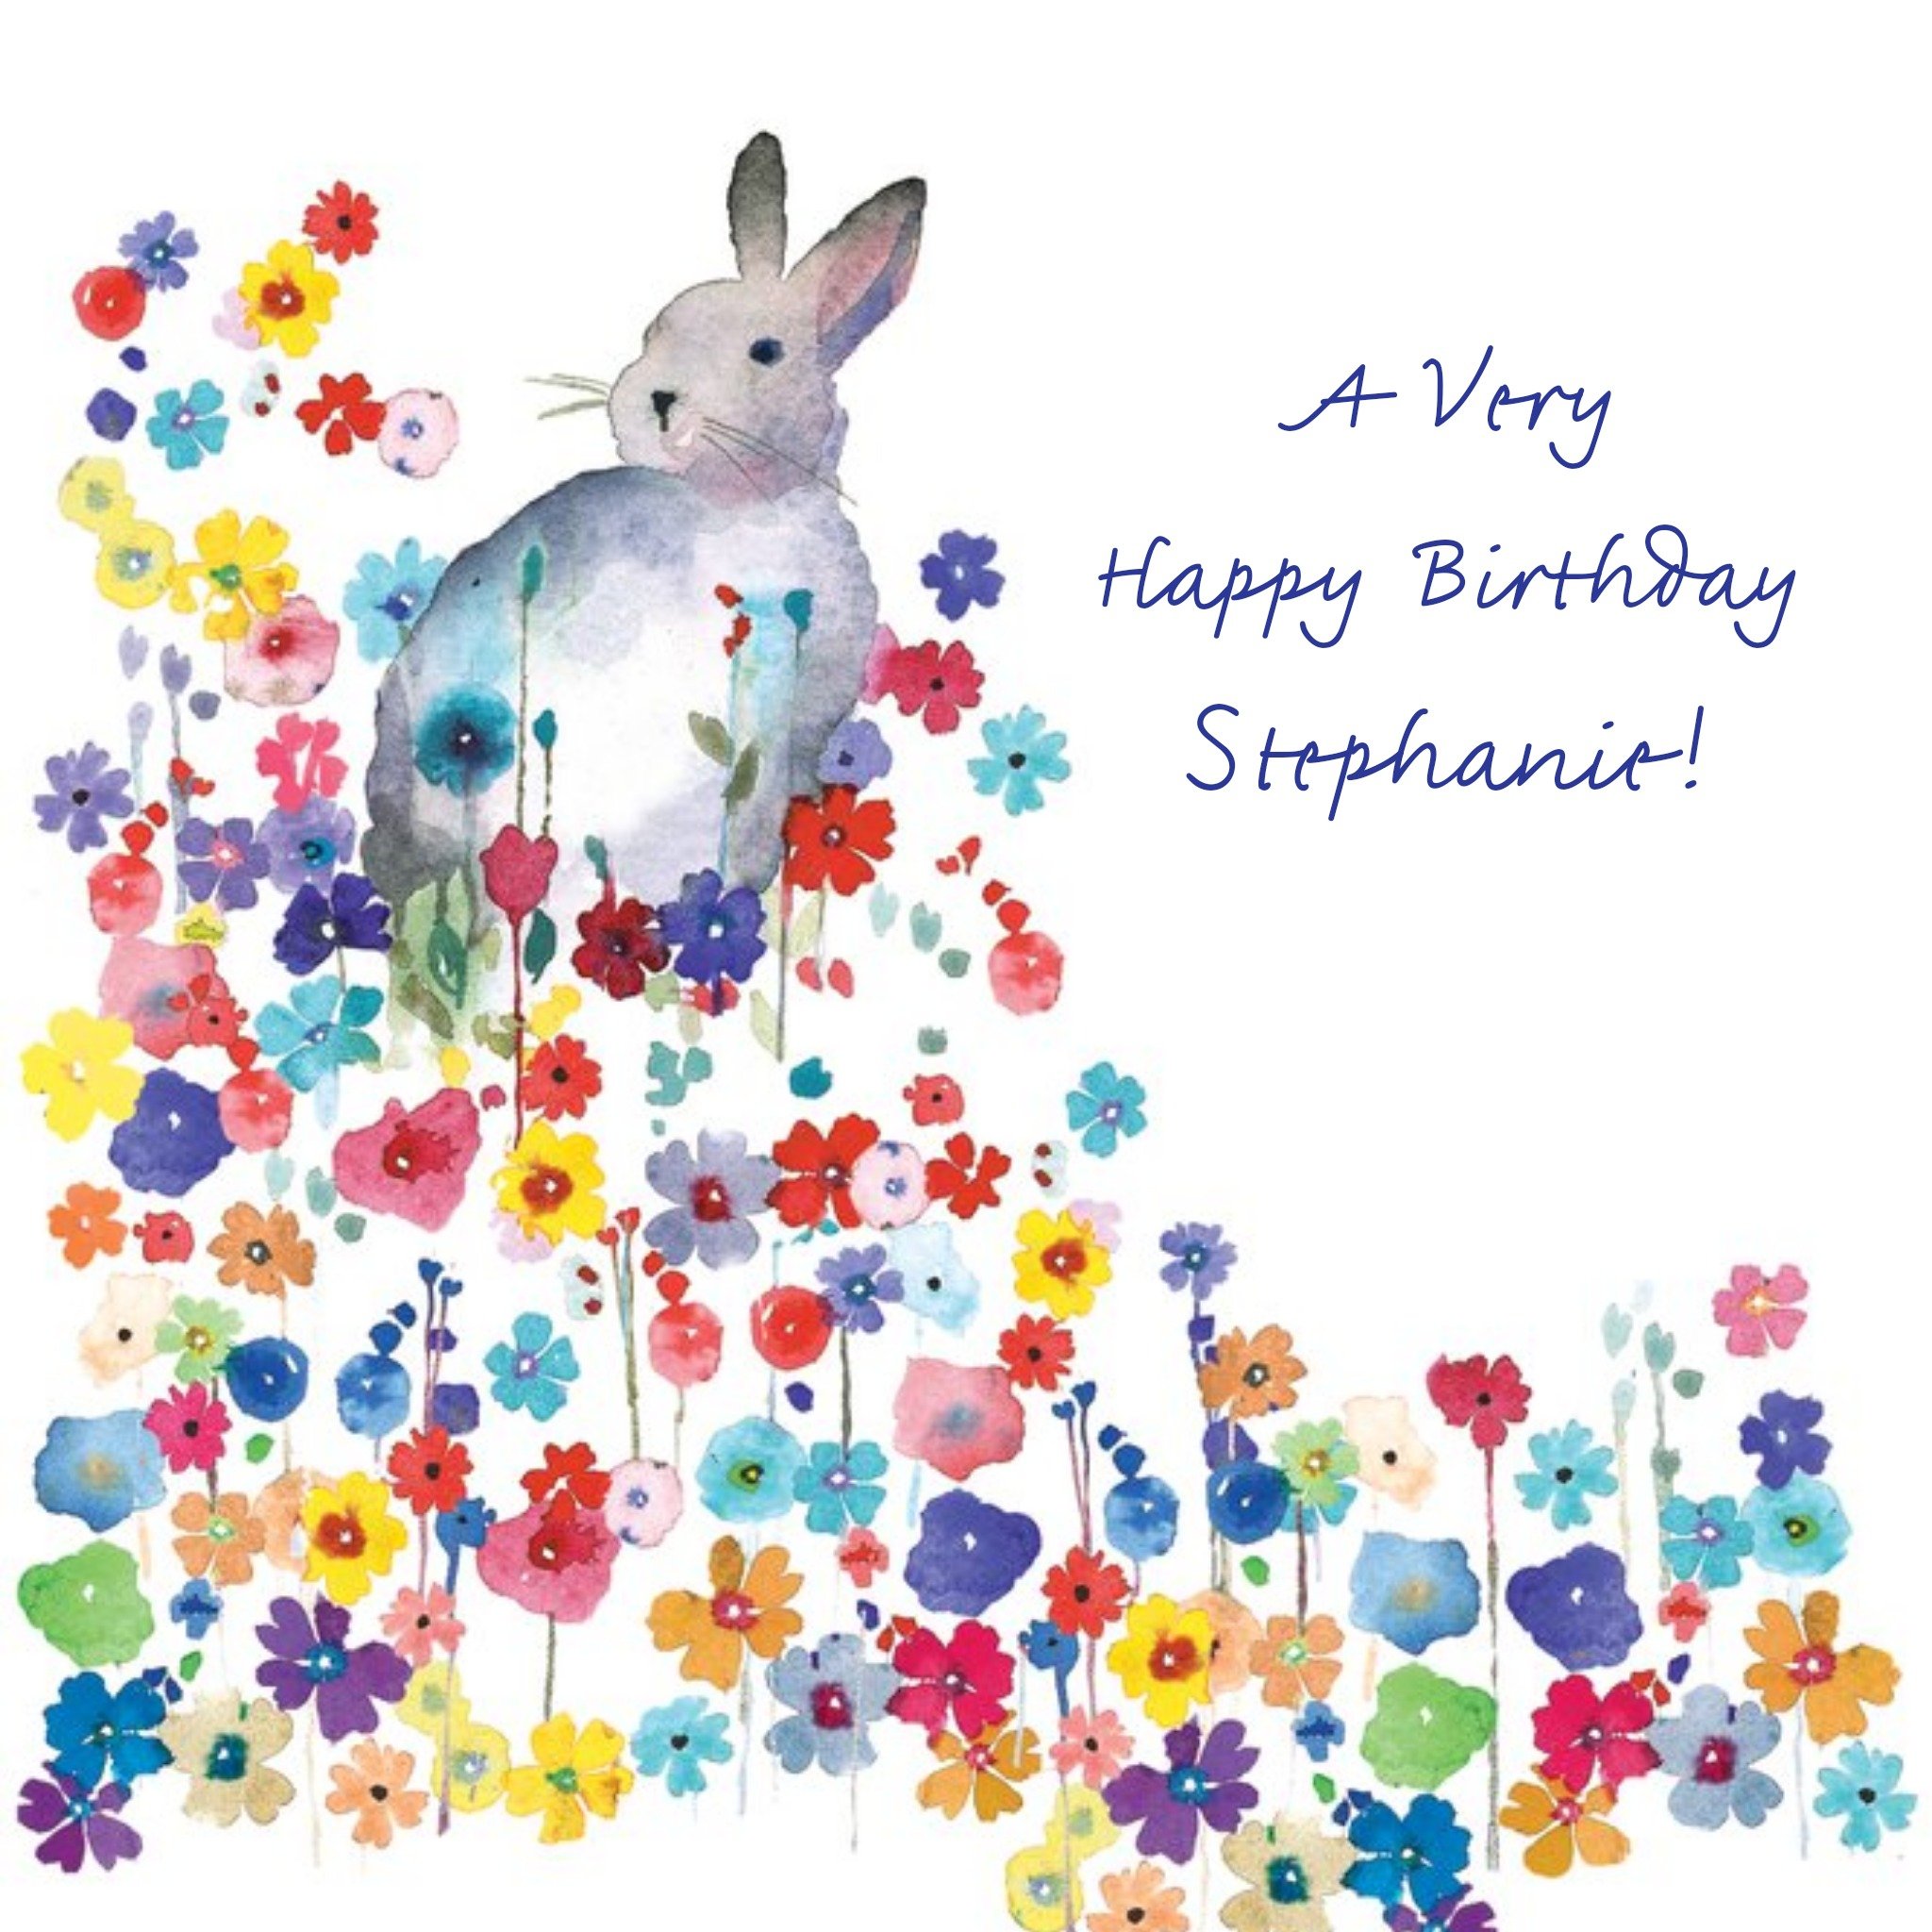 Moonpig Rabbit Illustration Greeting Card, Square